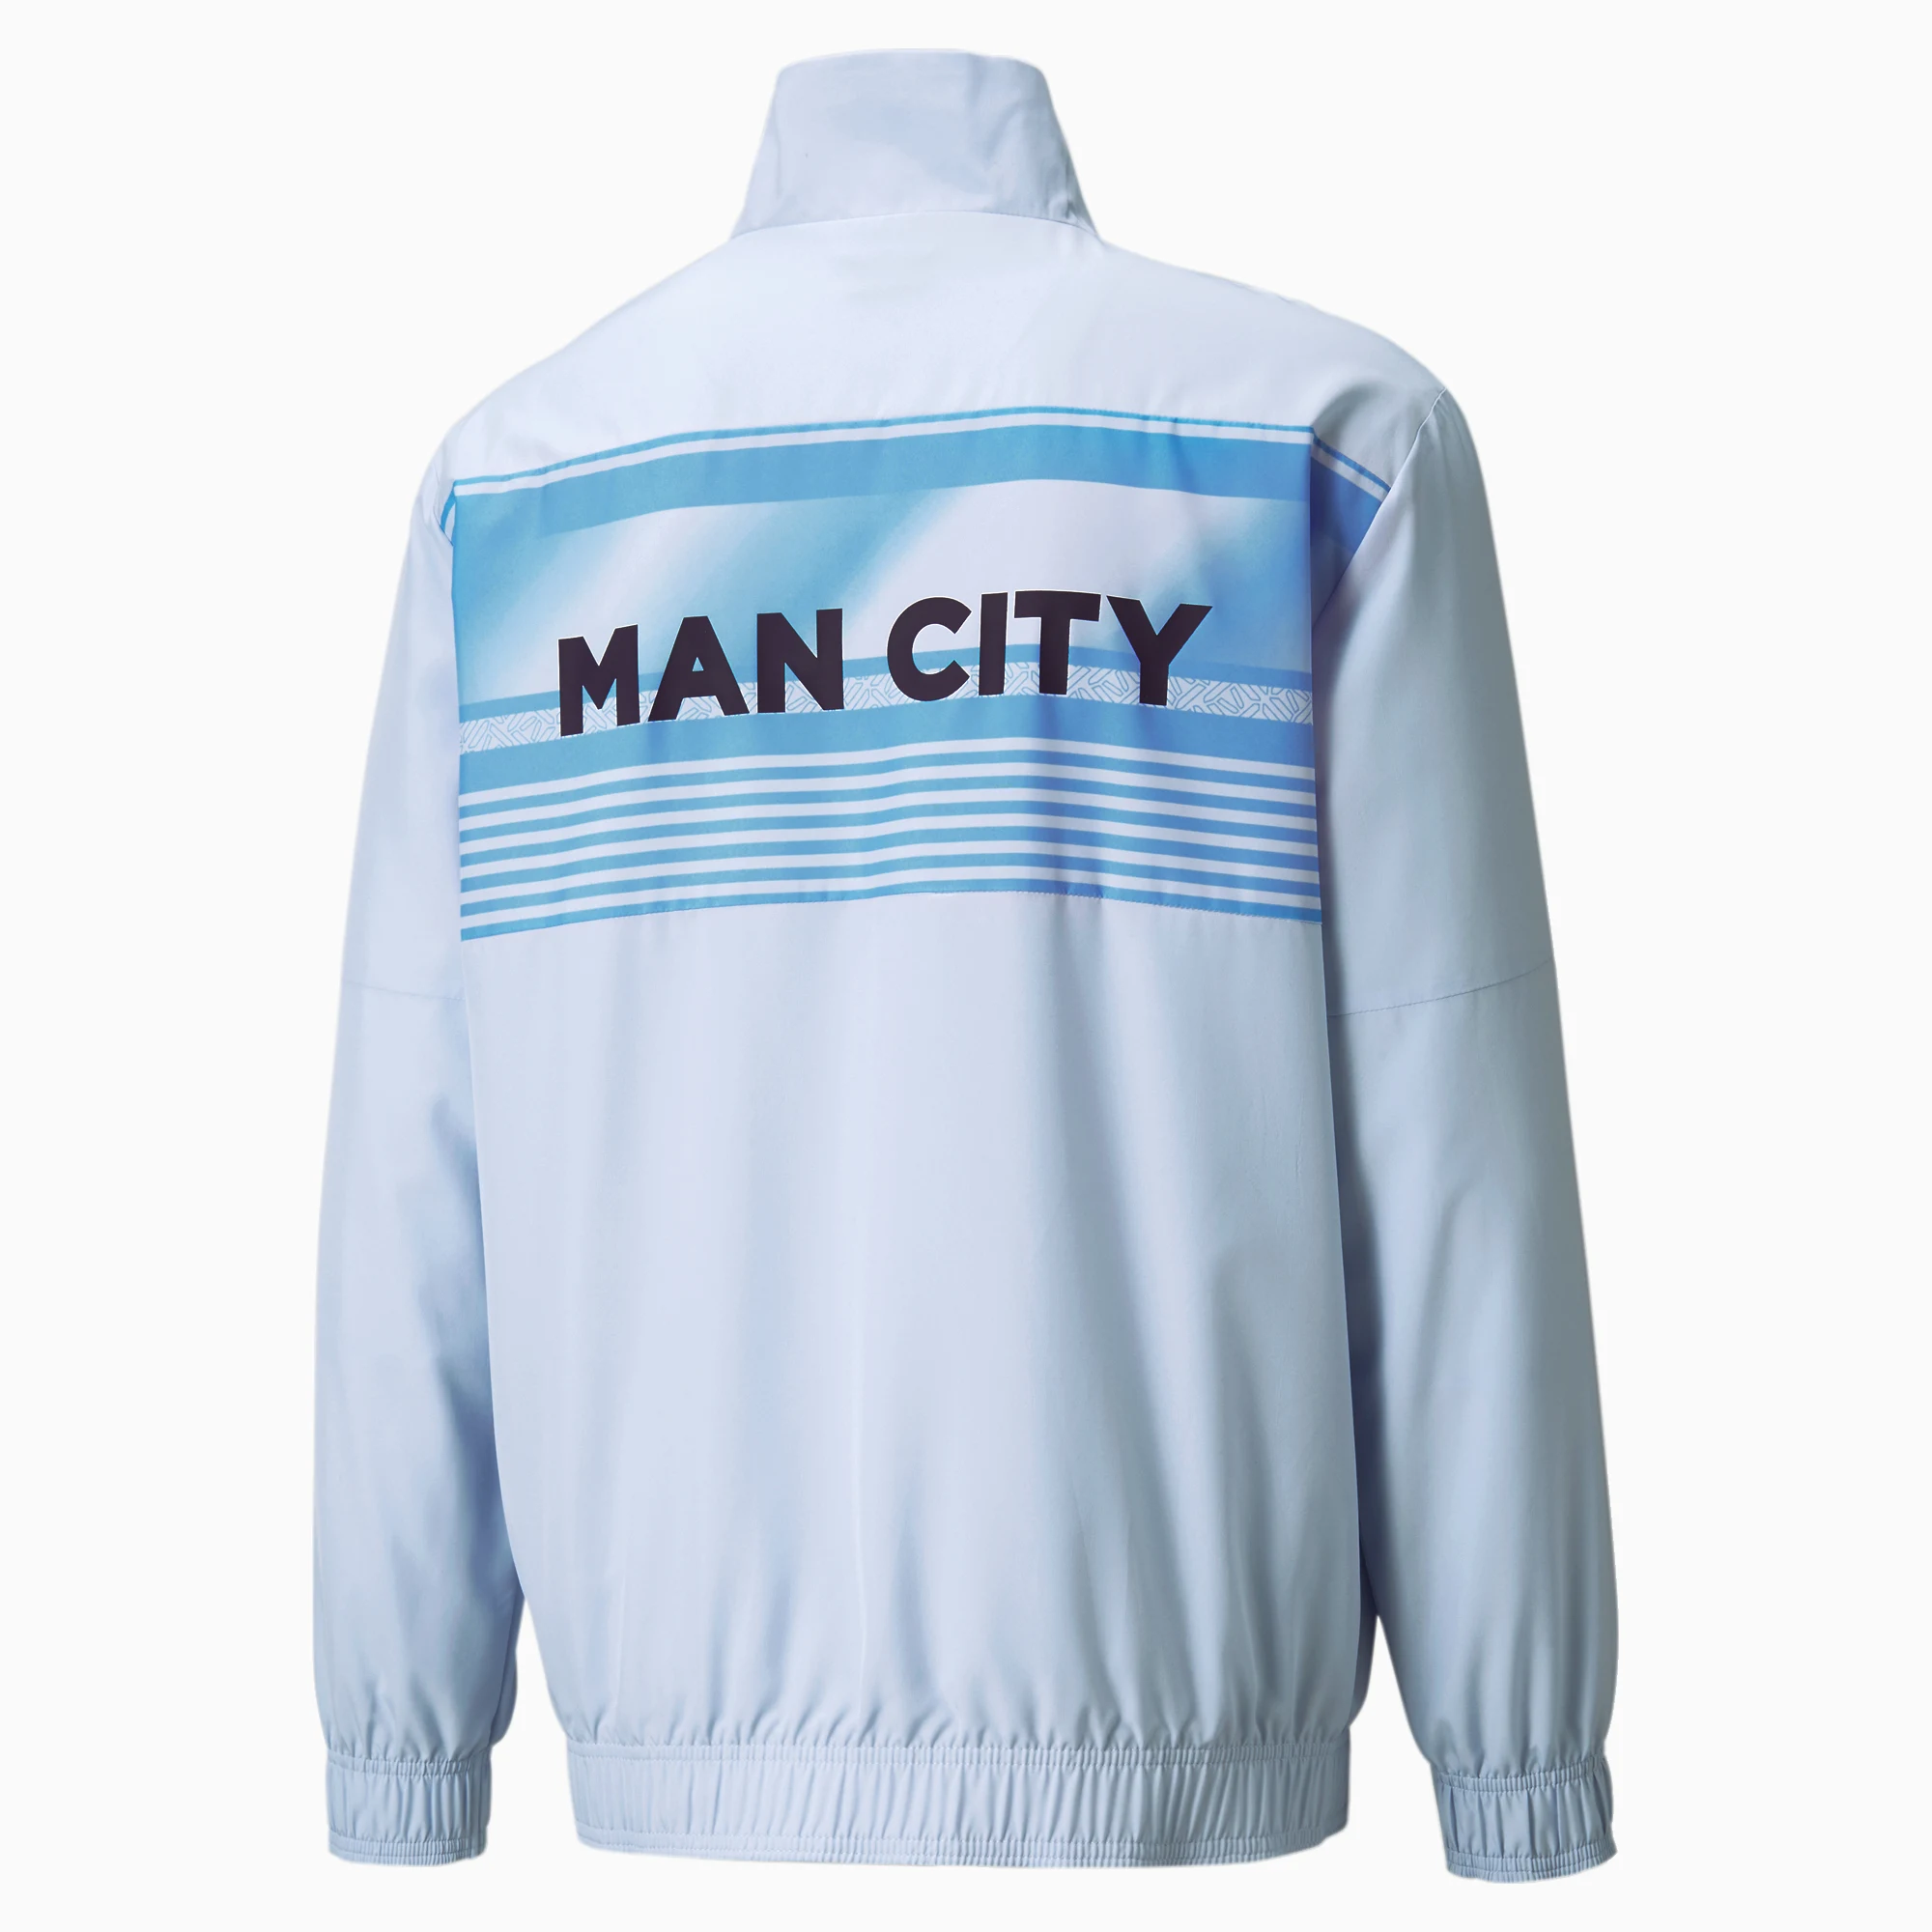 Puma Man City Pre match Men's Soccer Jacket